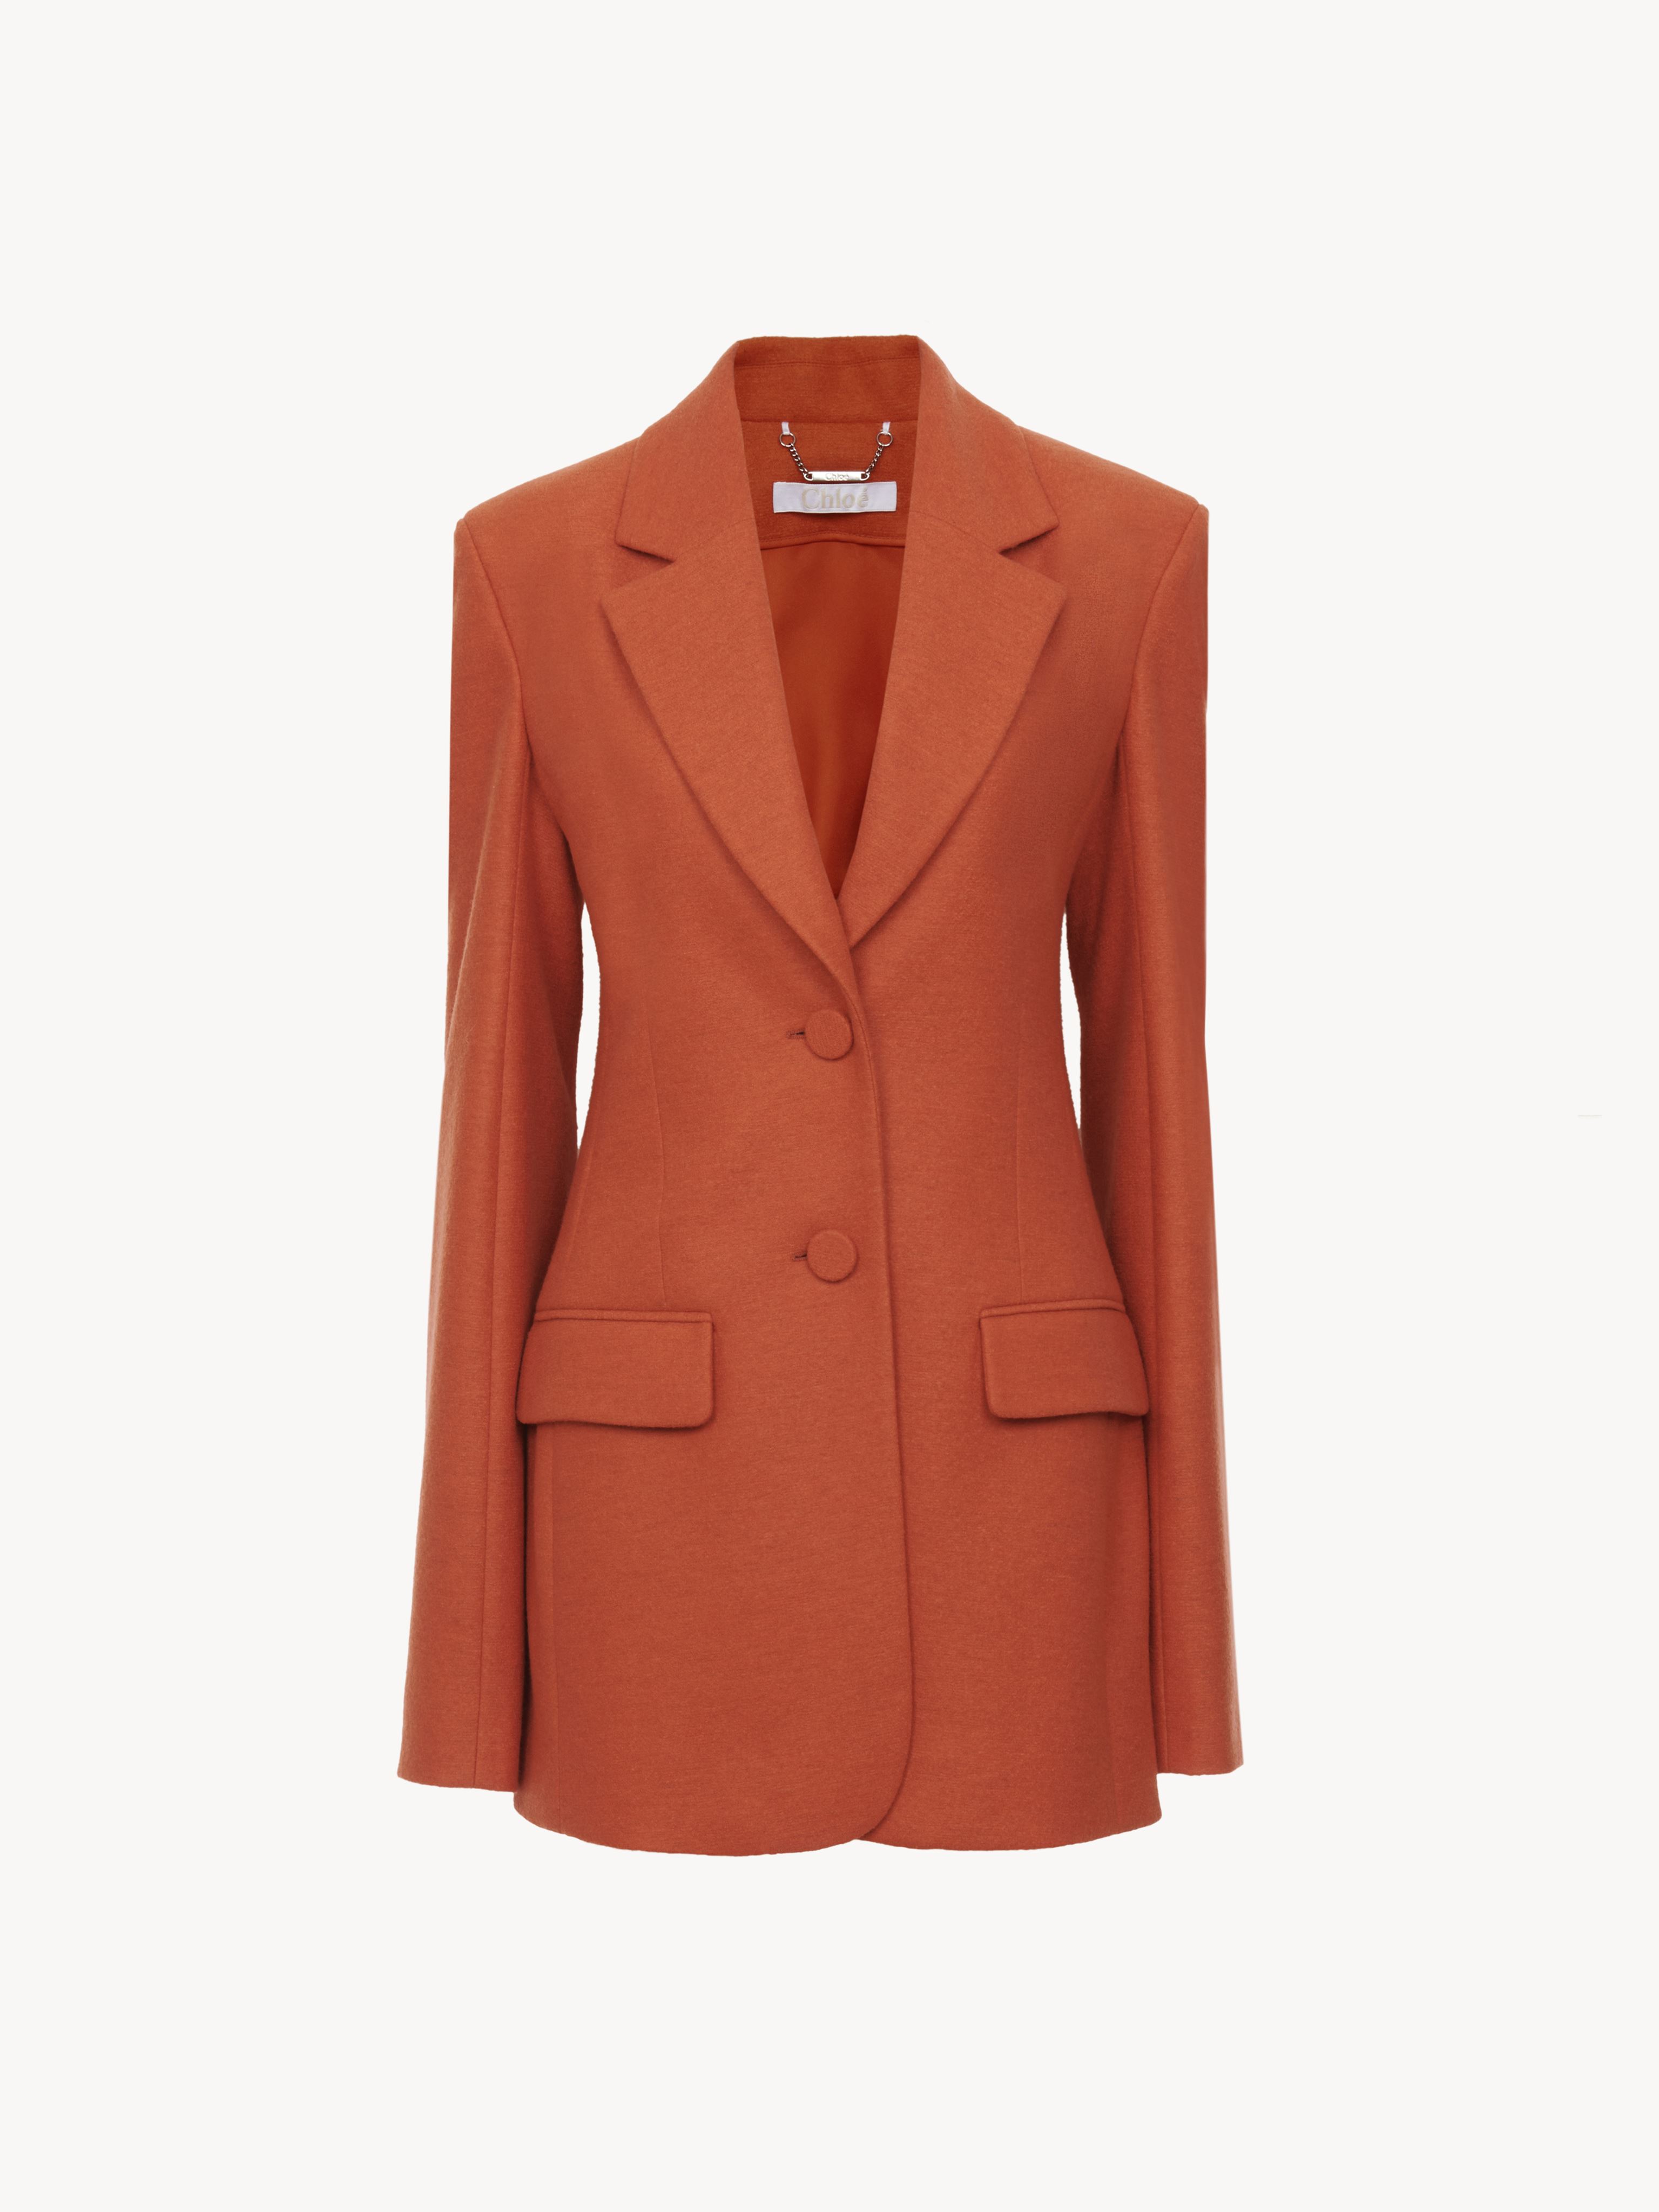 Chloé Two-button Tailored Jacket Orange Size 6 100% Virgin Wool